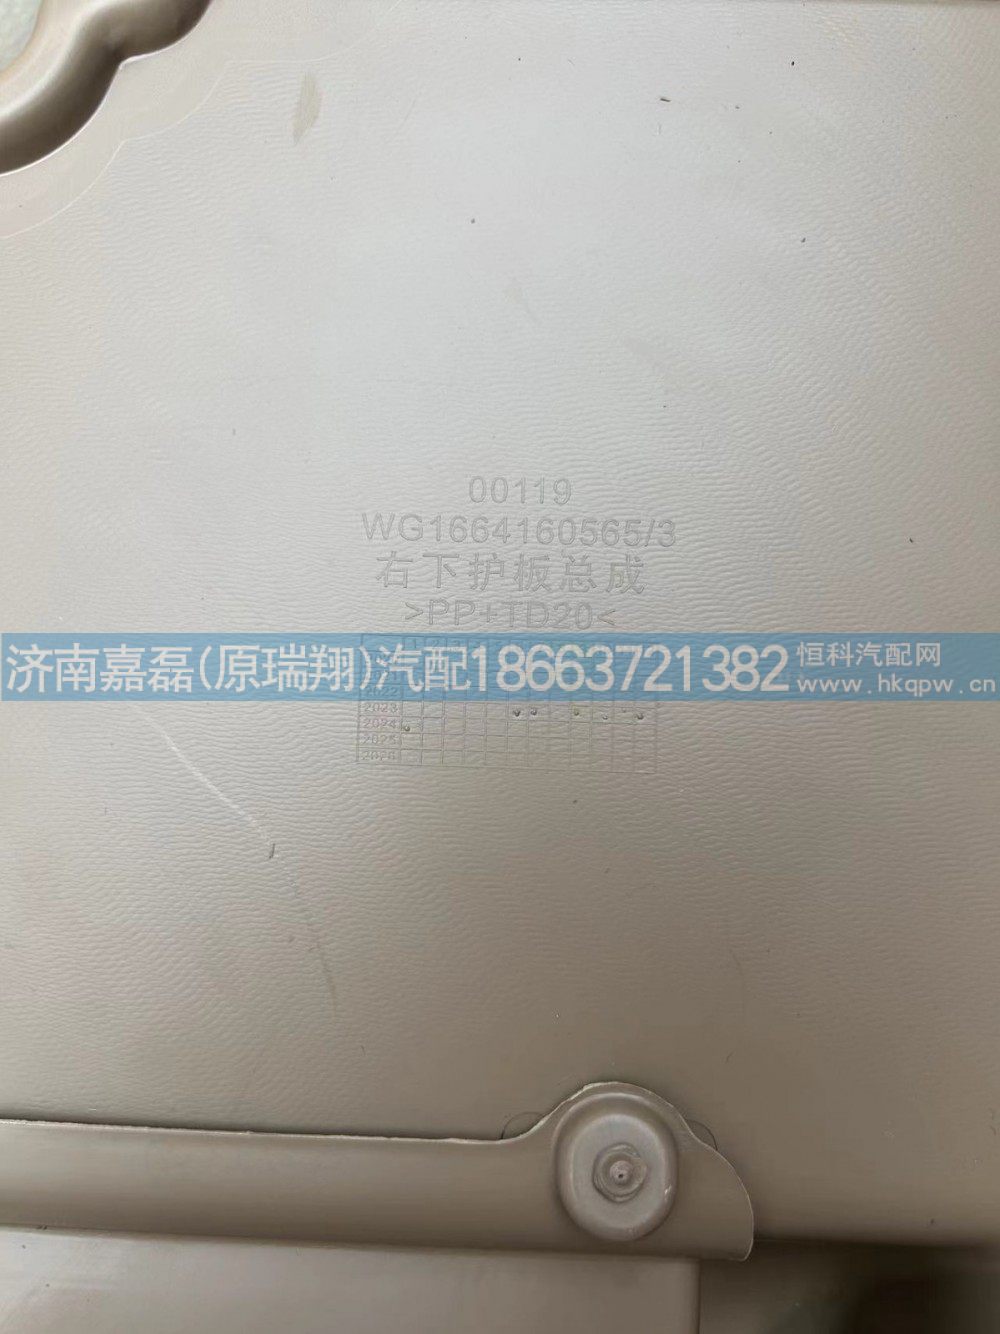 WG1664160565,右下护板总成,济南嘉磊汽车配件有限公司(原济南瑞翔)